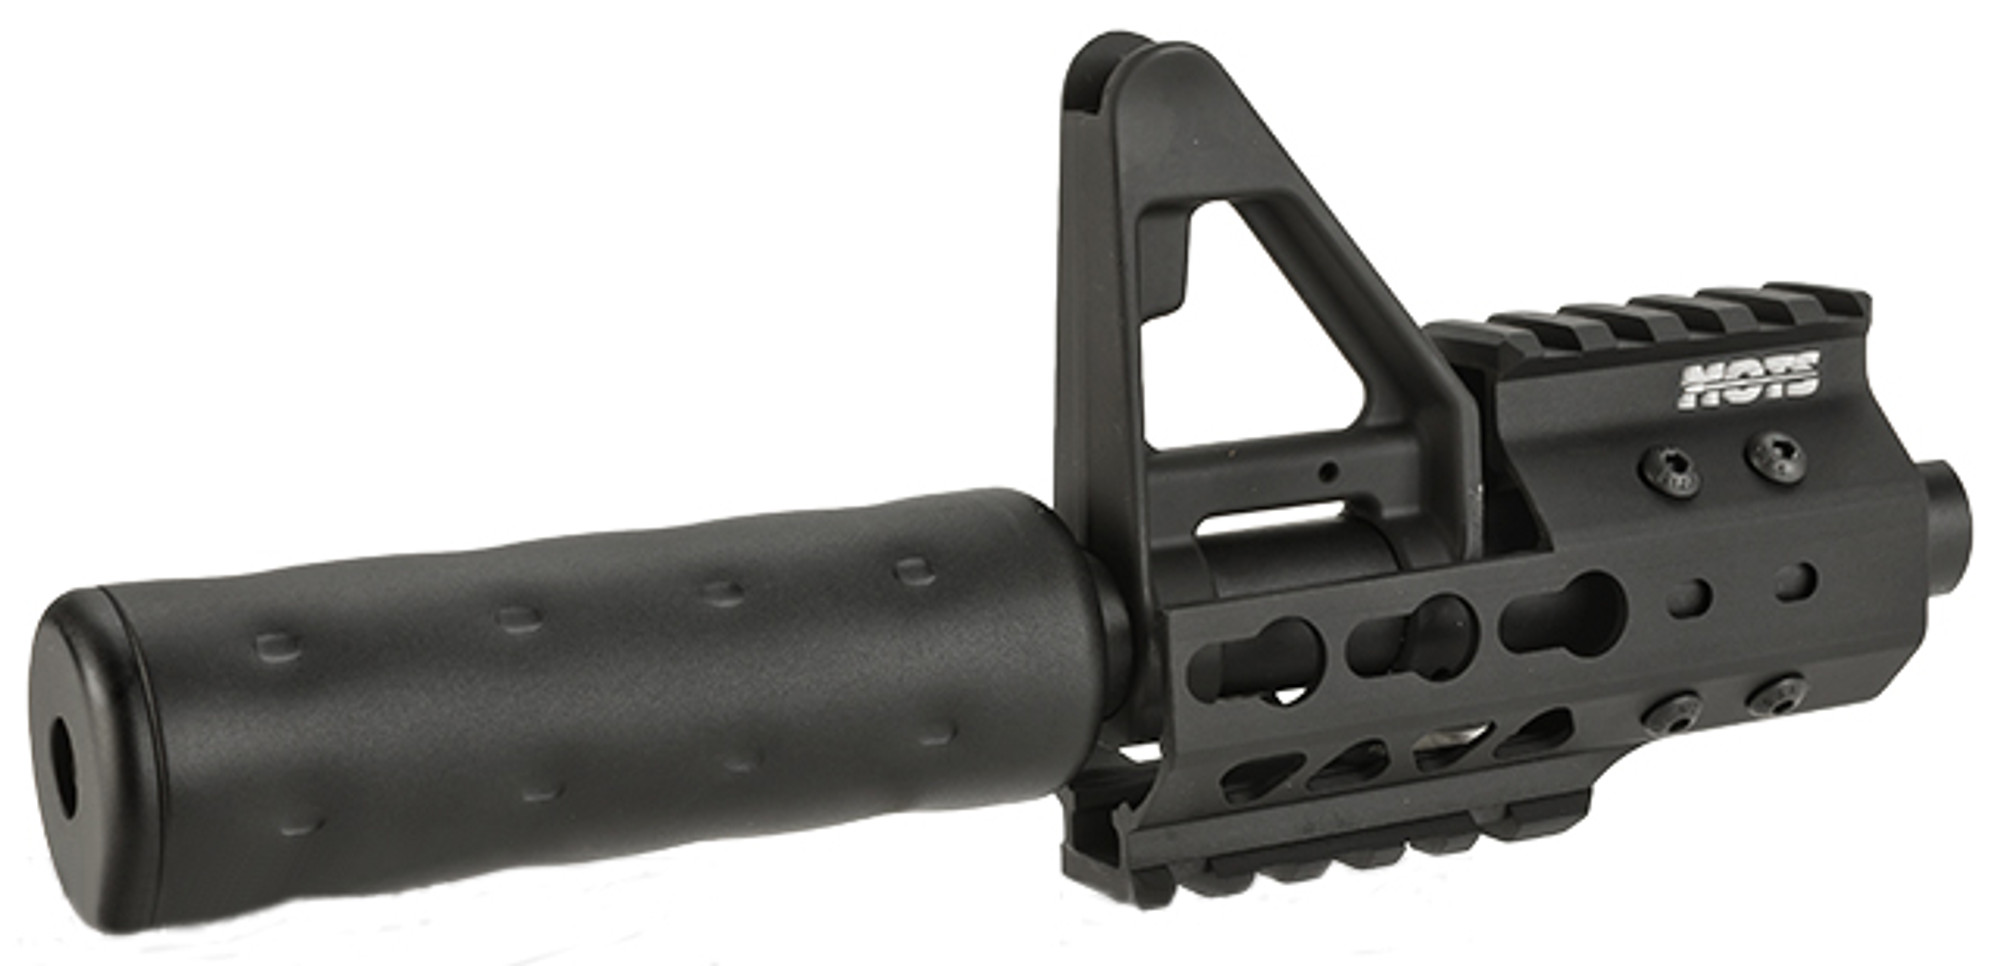 G&P MOTS 4" Stubby Keymod Rail System Kit for M4 / M16 Series Airsoft Rifles - Black